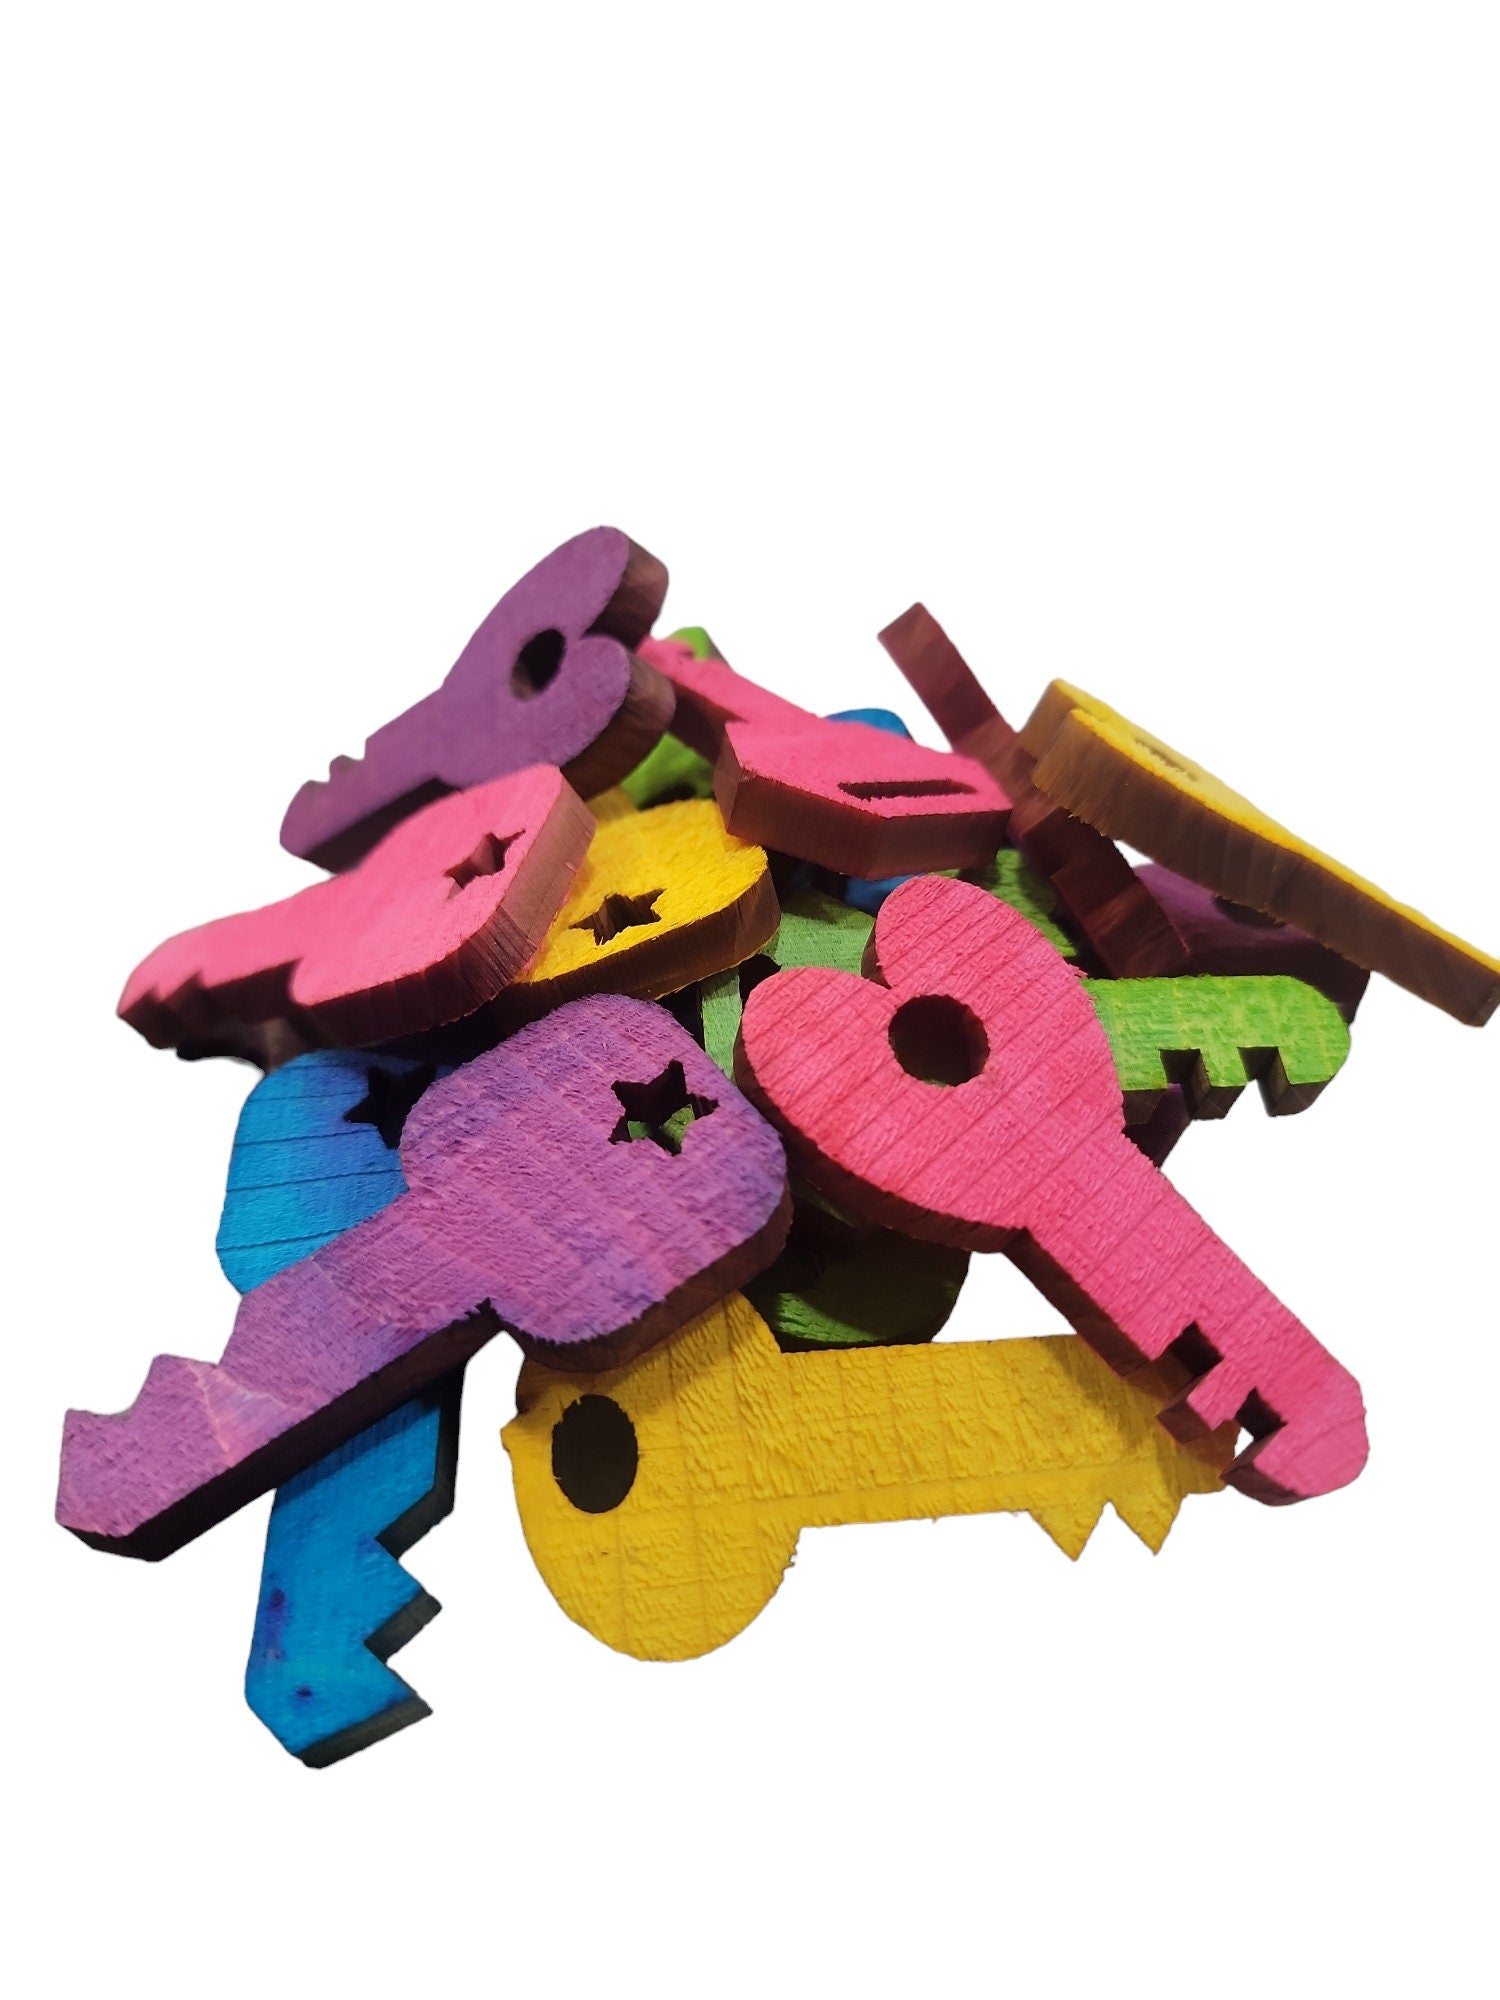 Colorful 3" Pine Keys - 10 Pack - Talon Toy for Parrots, Bird Toy Parts